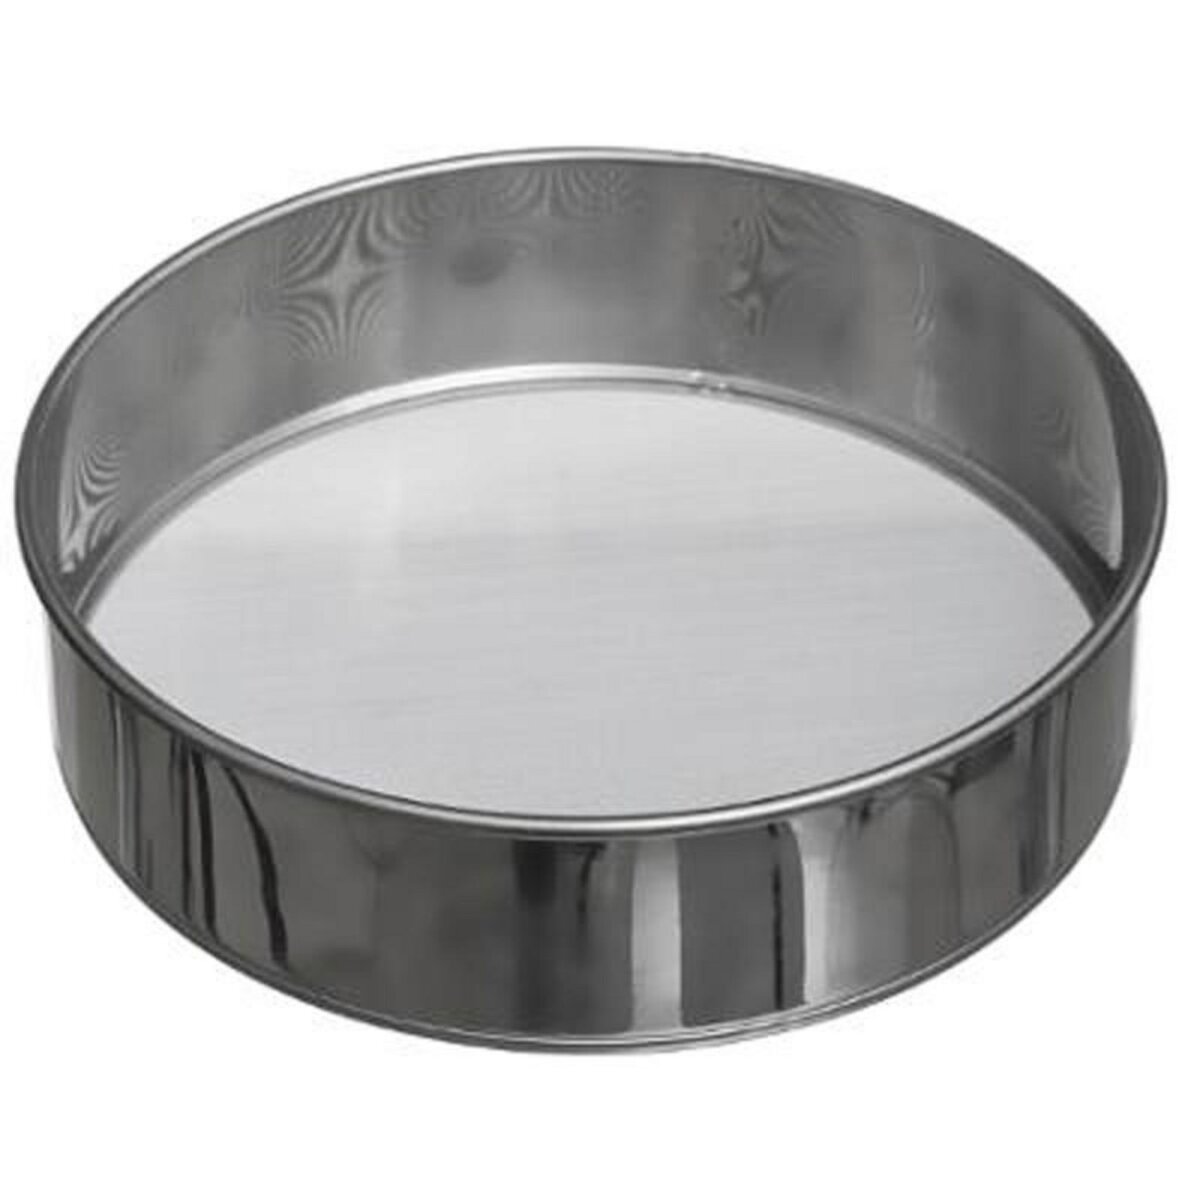 Tamis de cuisine en inox farine filtre patisserie 18 cm pas cher 